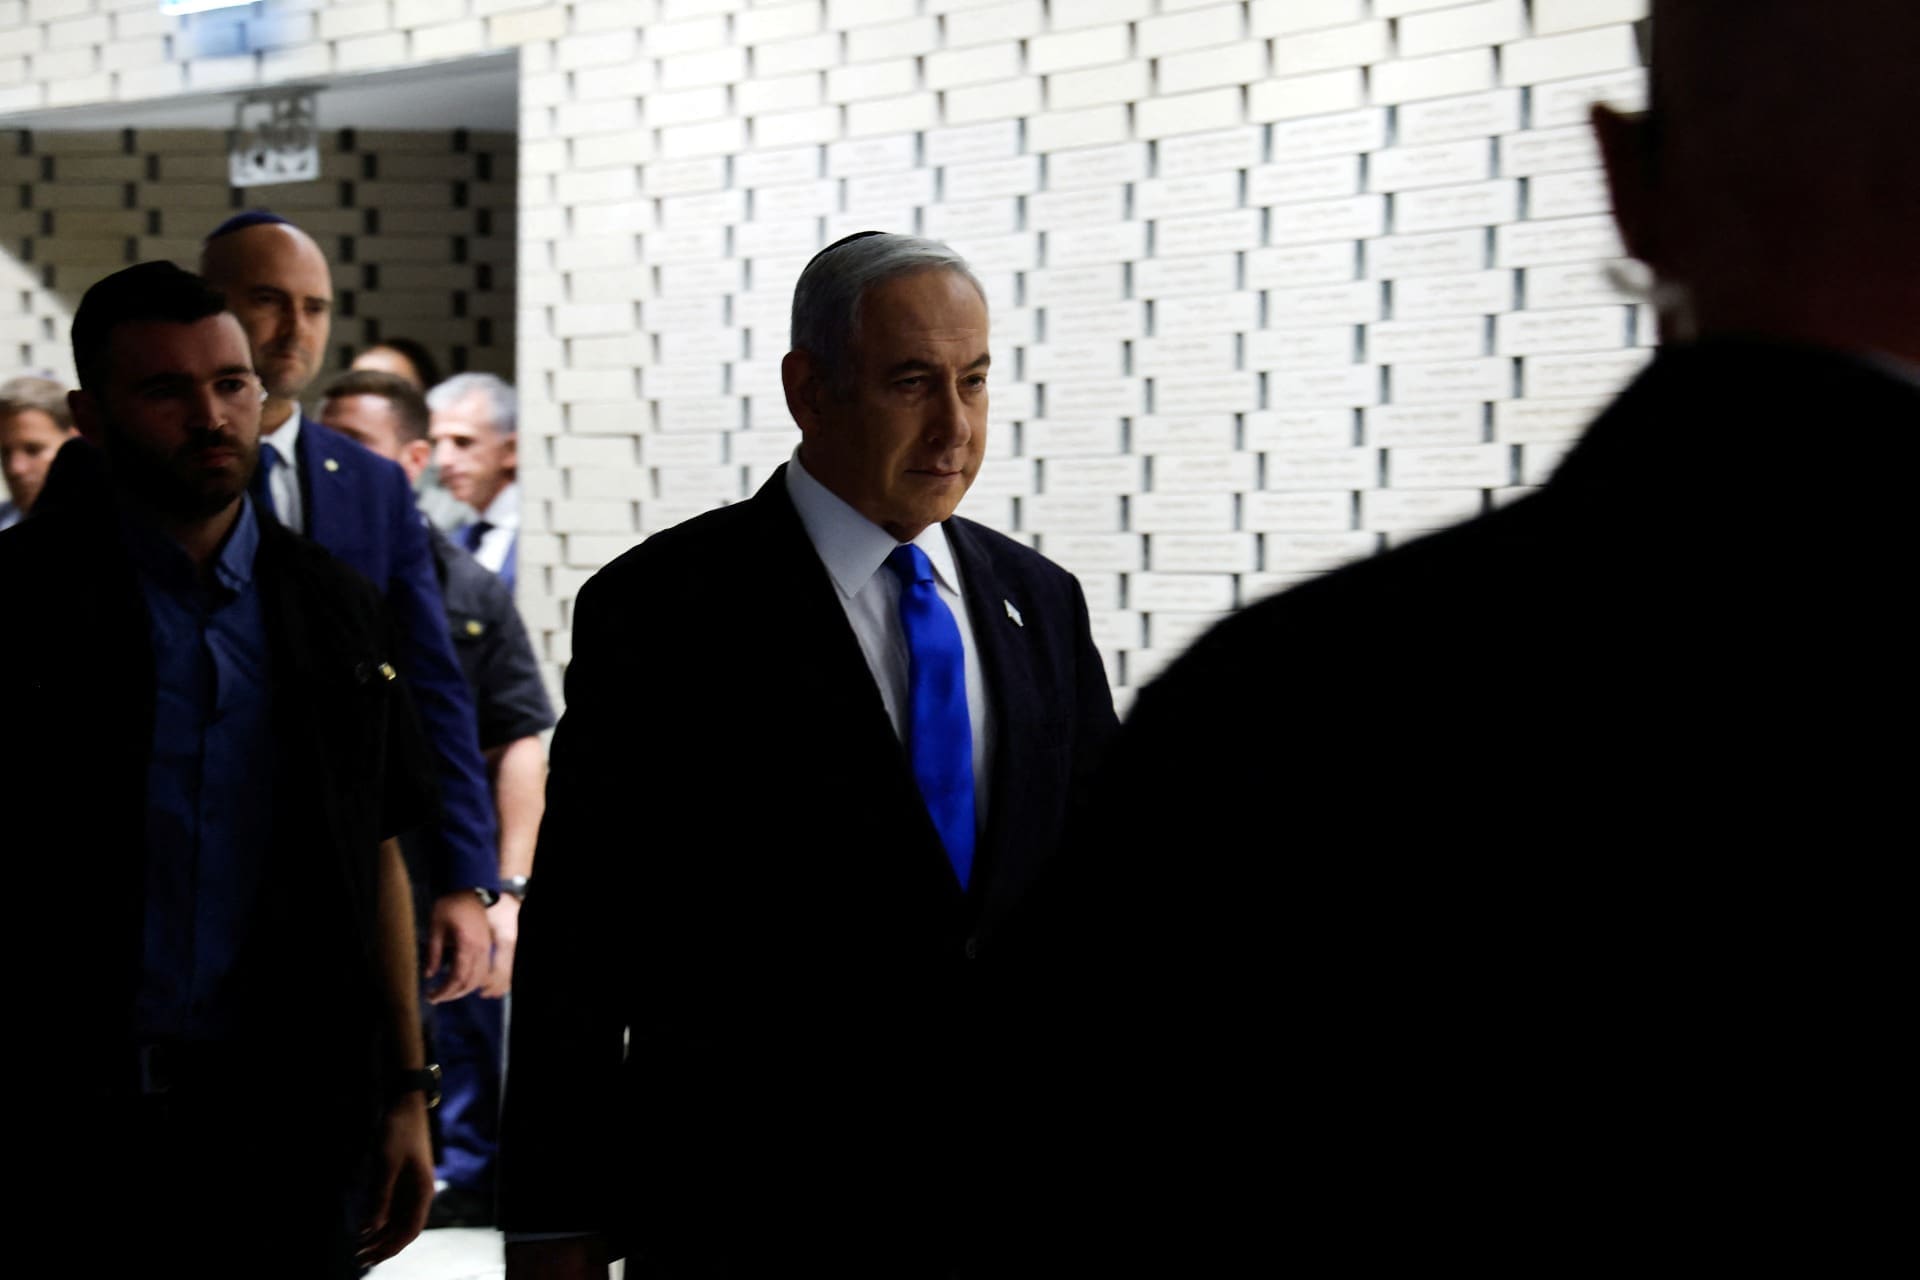 “Israel irá vingar-se deste dia negro”, avisa Netanyahu